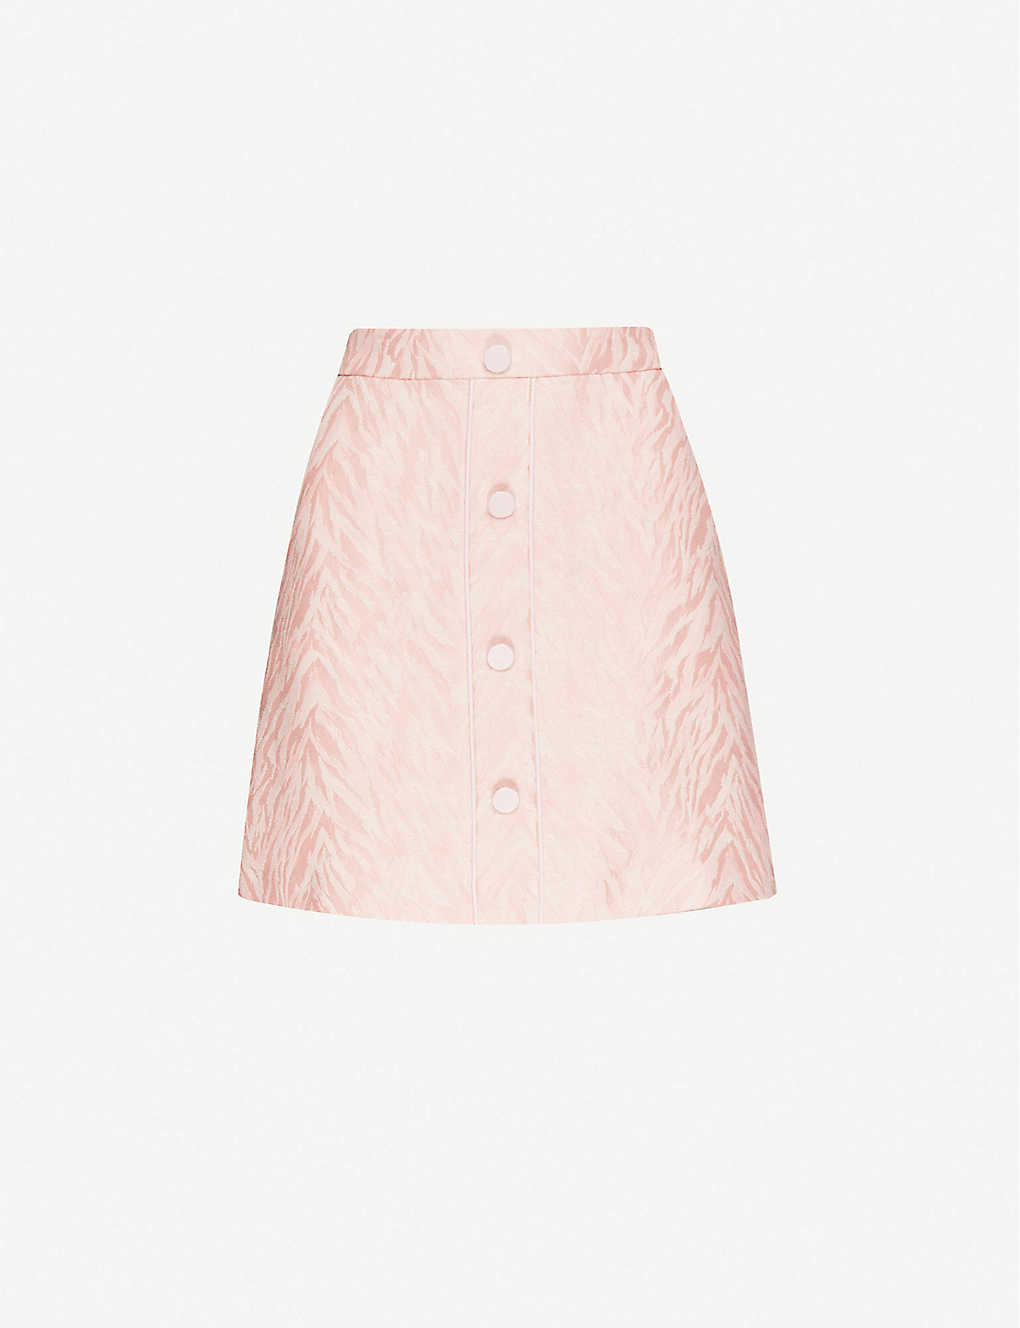 Pink High Waisted Skirt